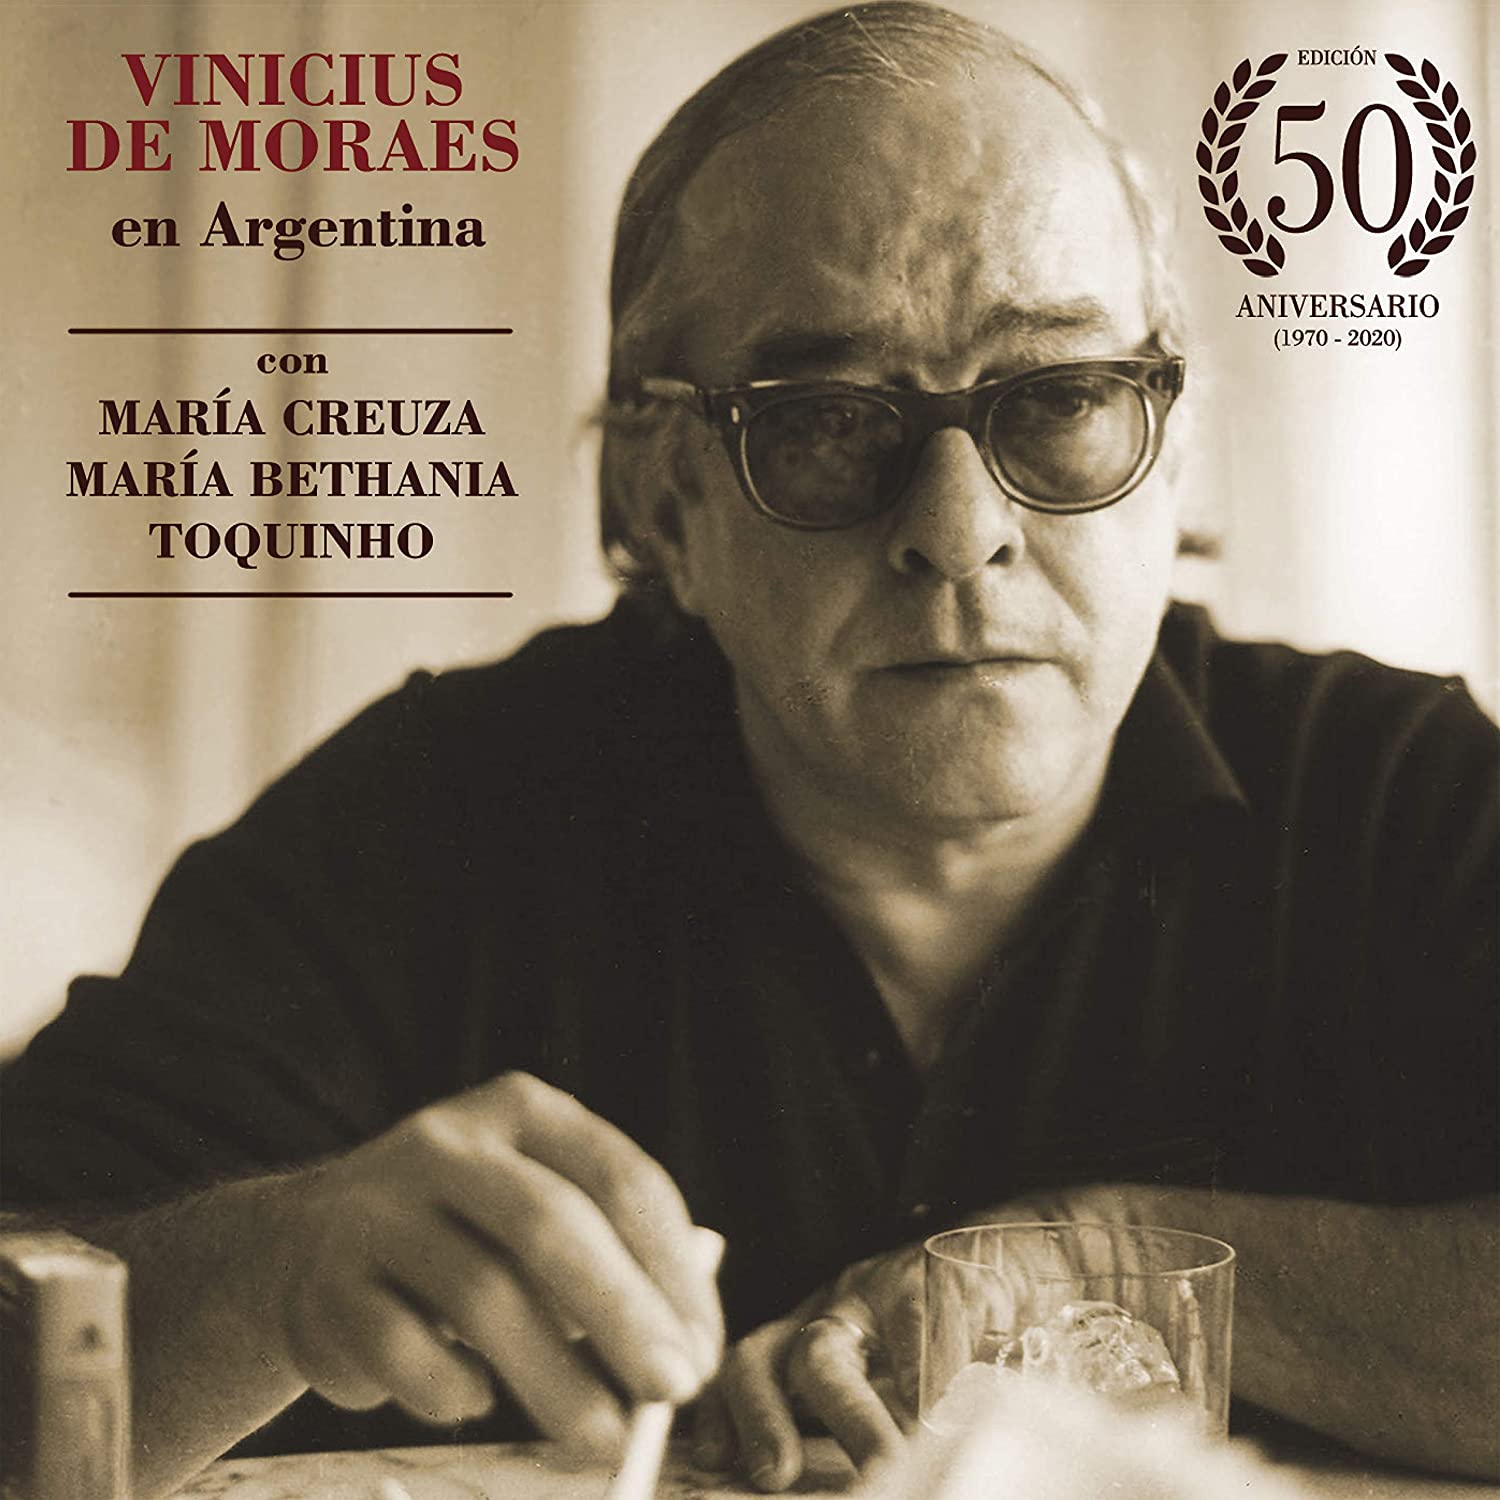 VINICIUS DE MORAES - Vinicius De Moraes en Argentina : 50th Anniversary cover 